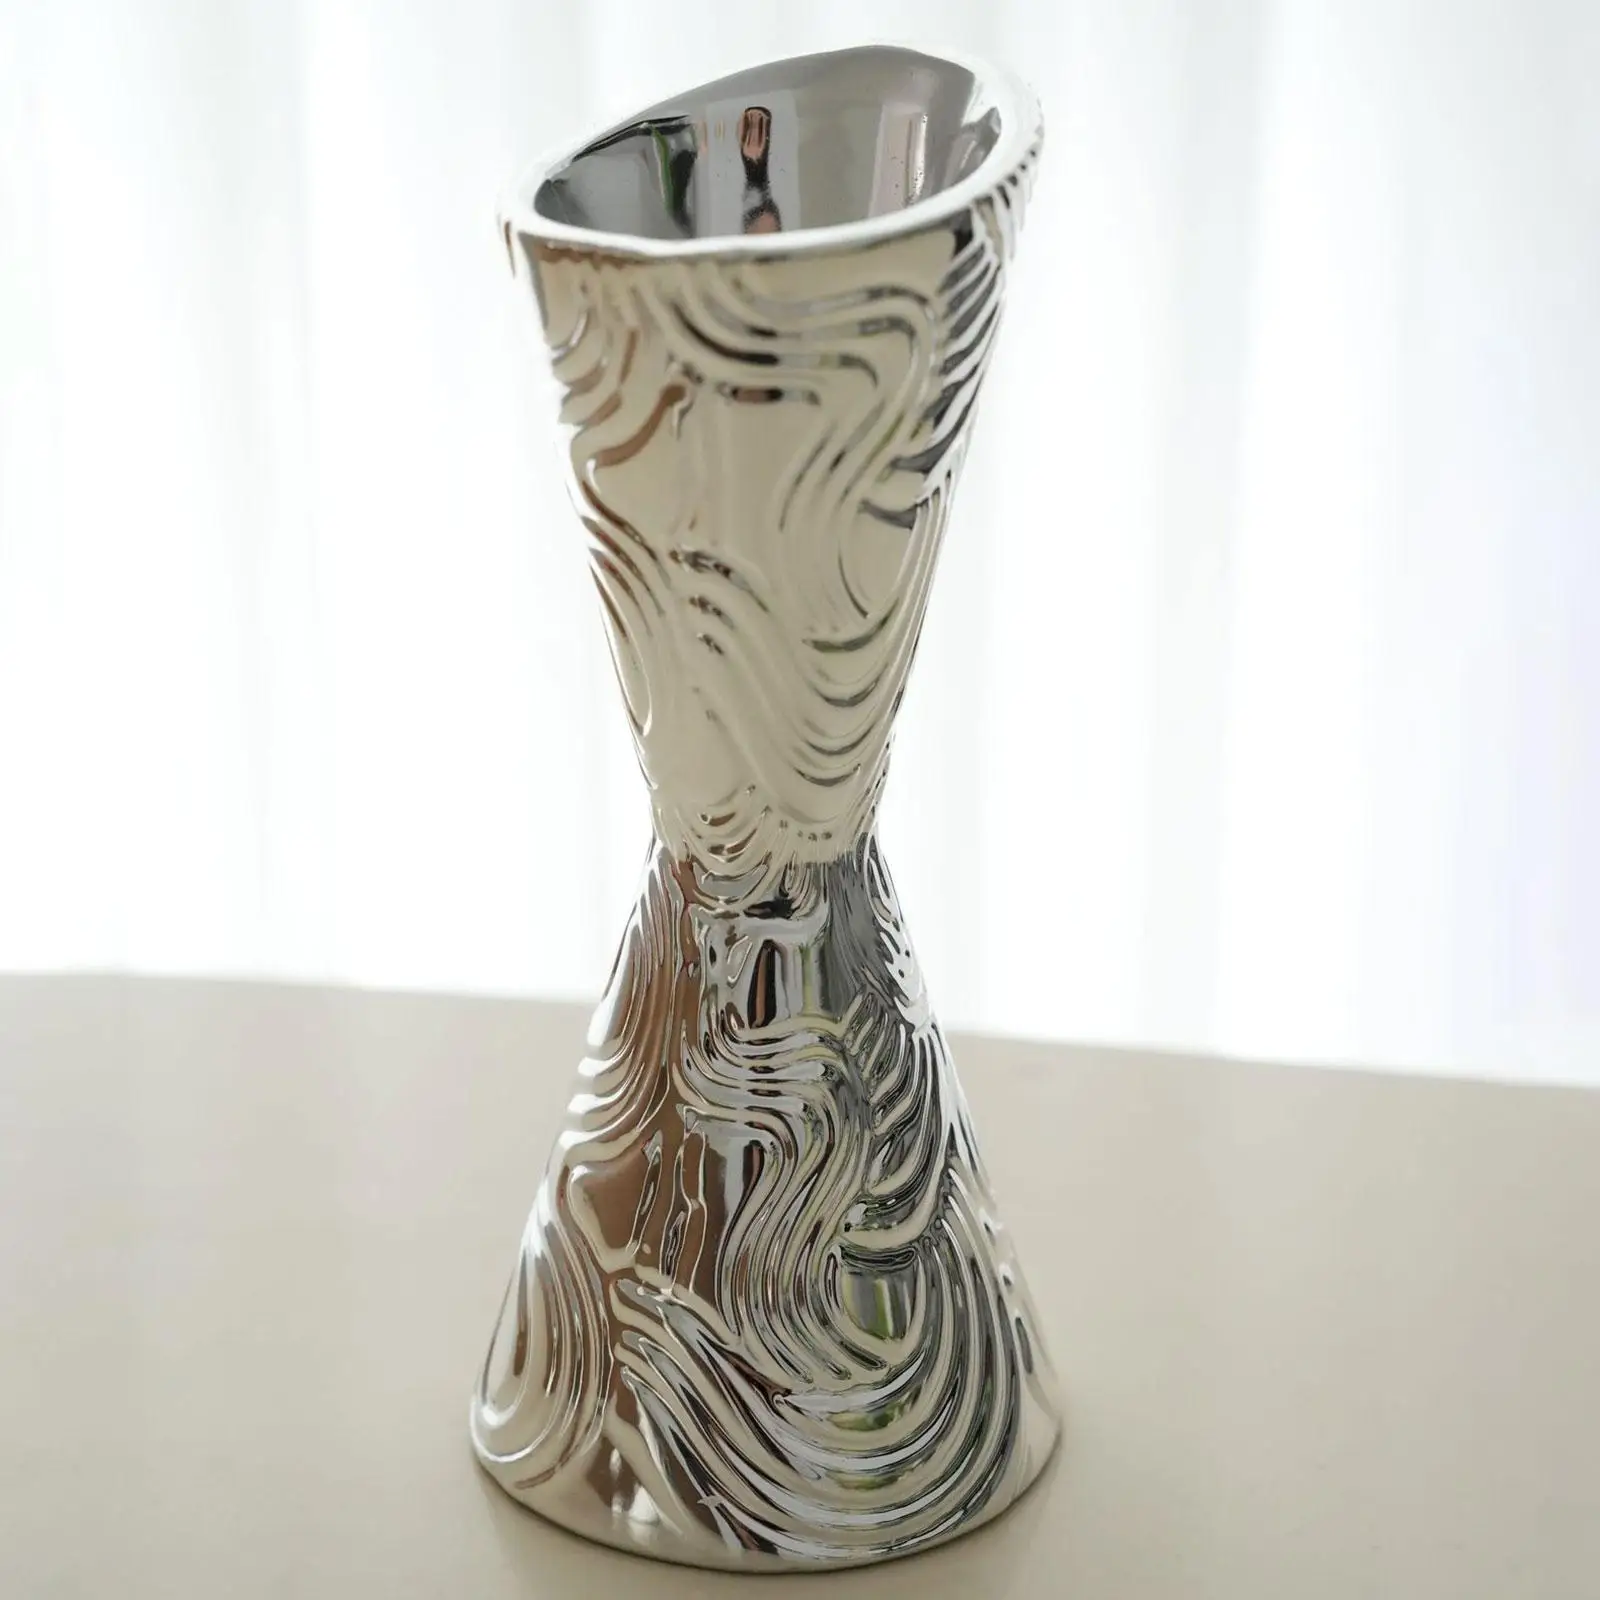 Modern Flower Vase Minimalist Decorative Vase Table Centerpiece Ceramic Vase for Dining Table Office Party Shelf Home Decor